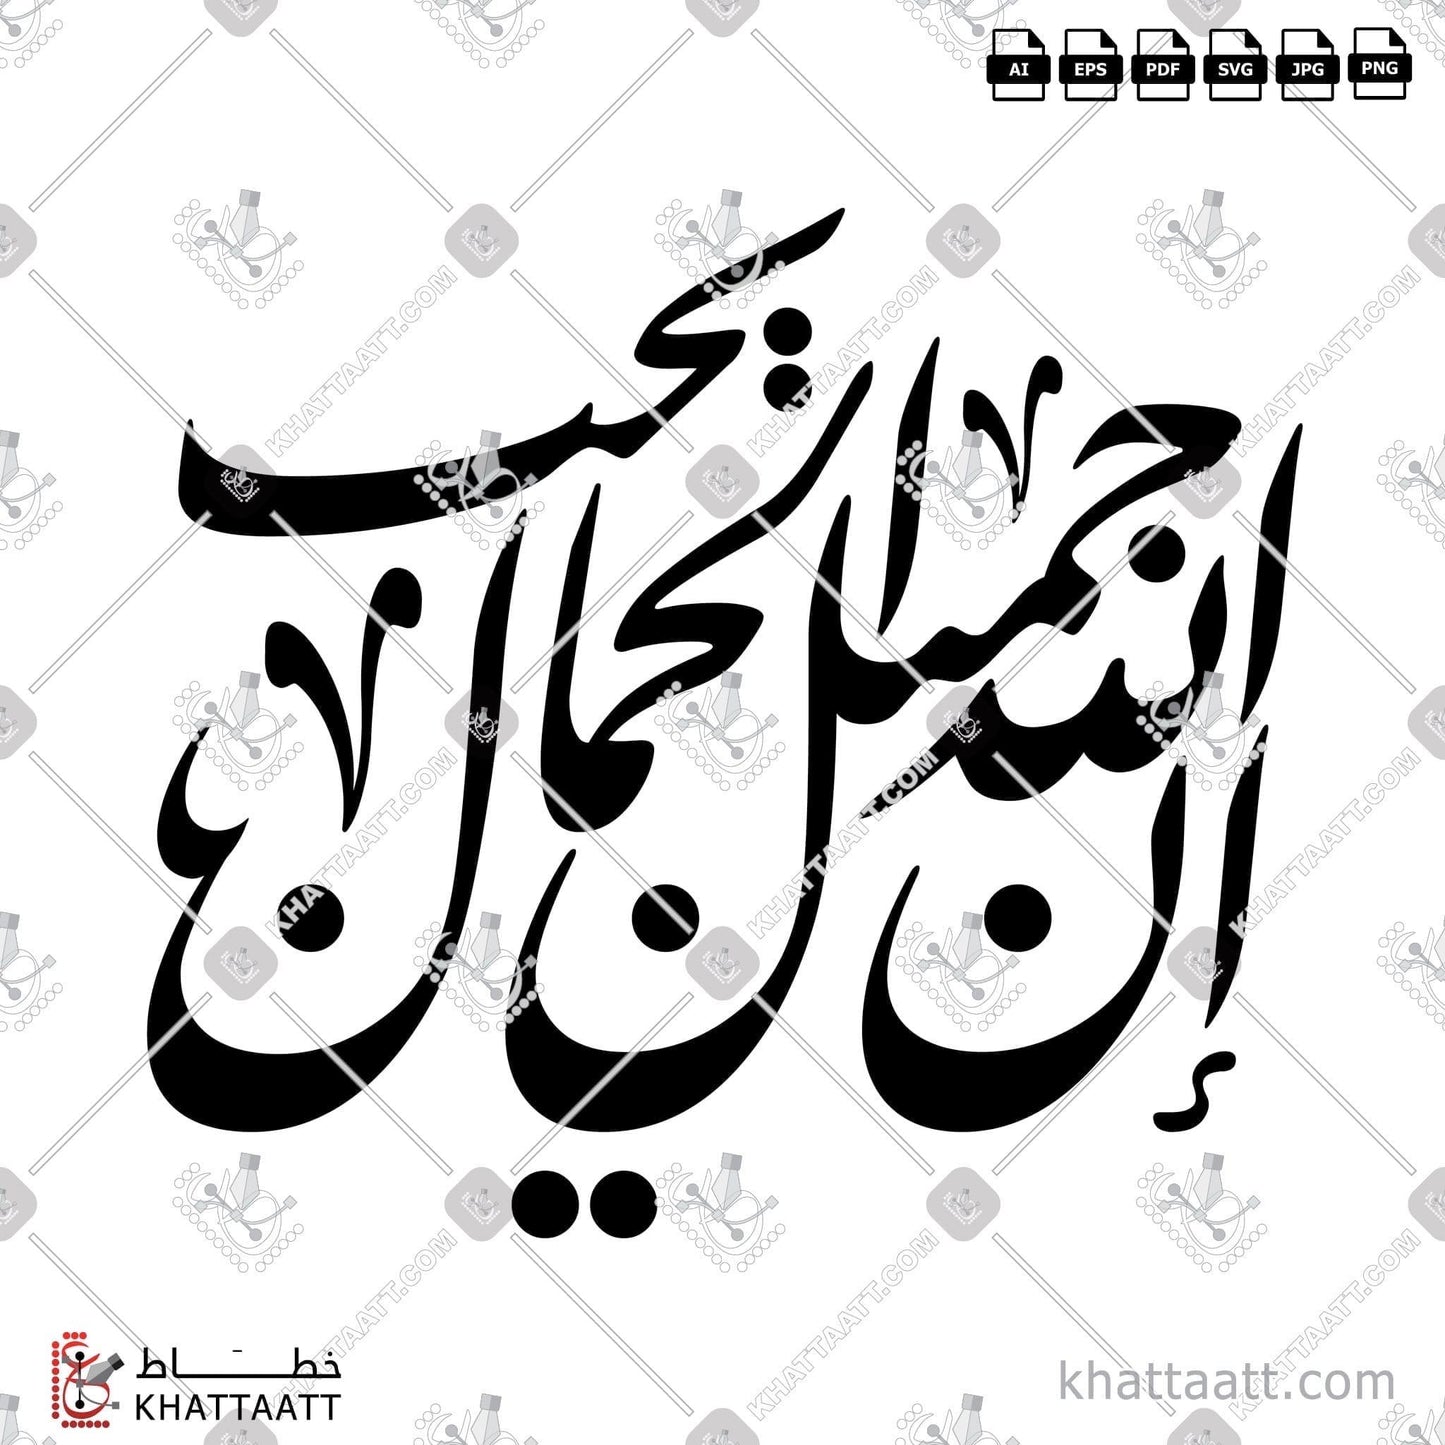 Download Arabic Calligraphy of إن الله جميل يحب الجمال in Farsi - الخط الفارسي in vector and .png